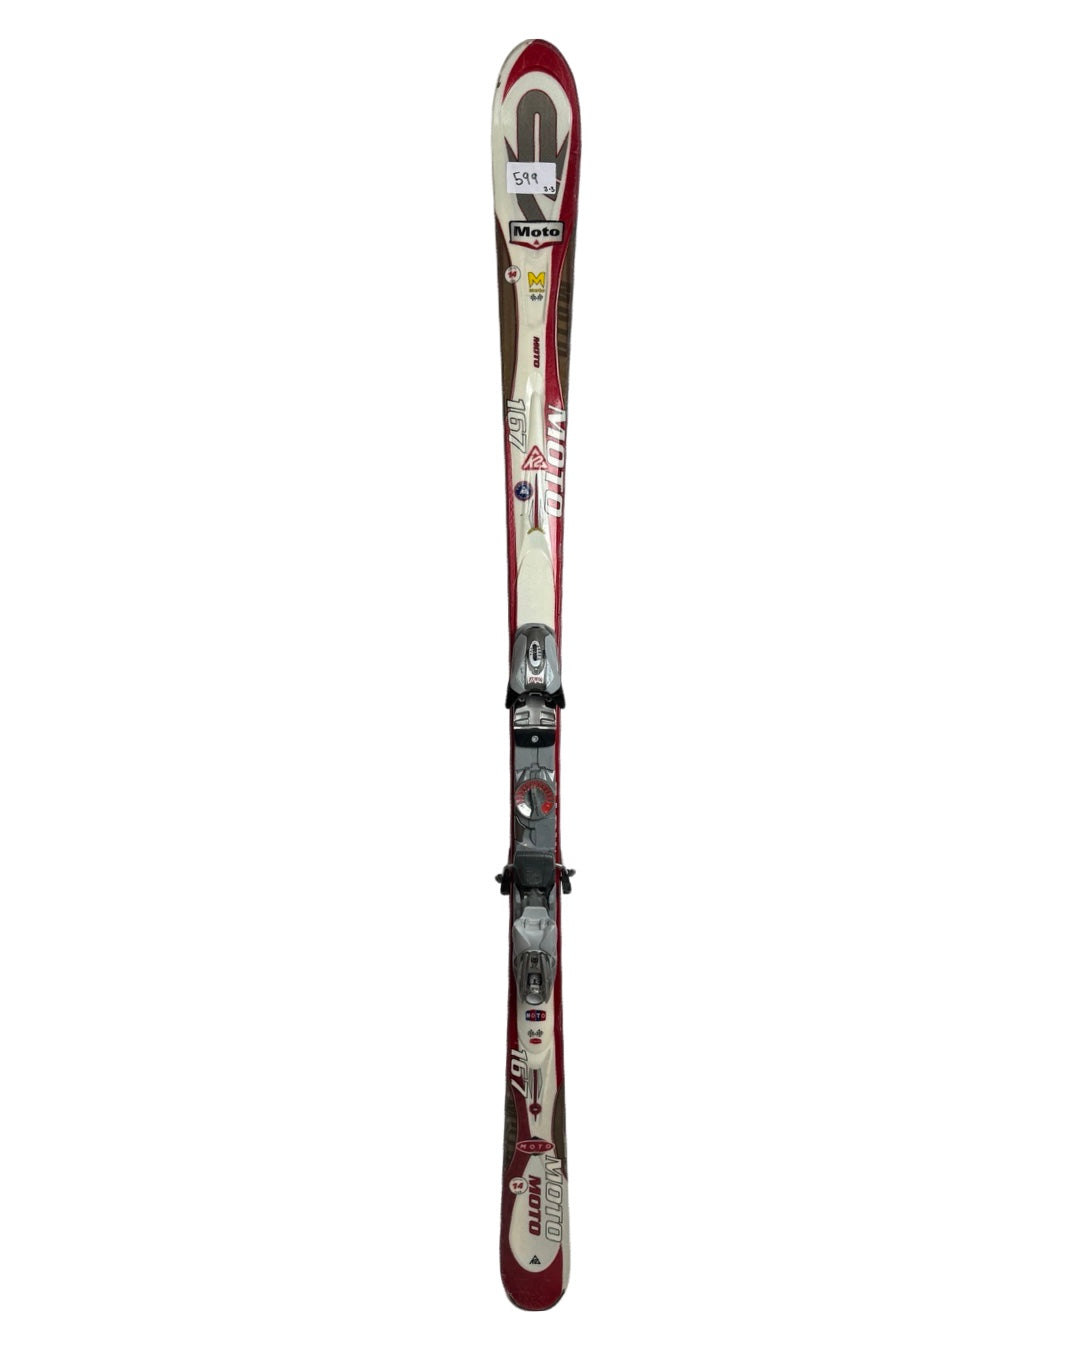 Adult skiing - mixed 599 3